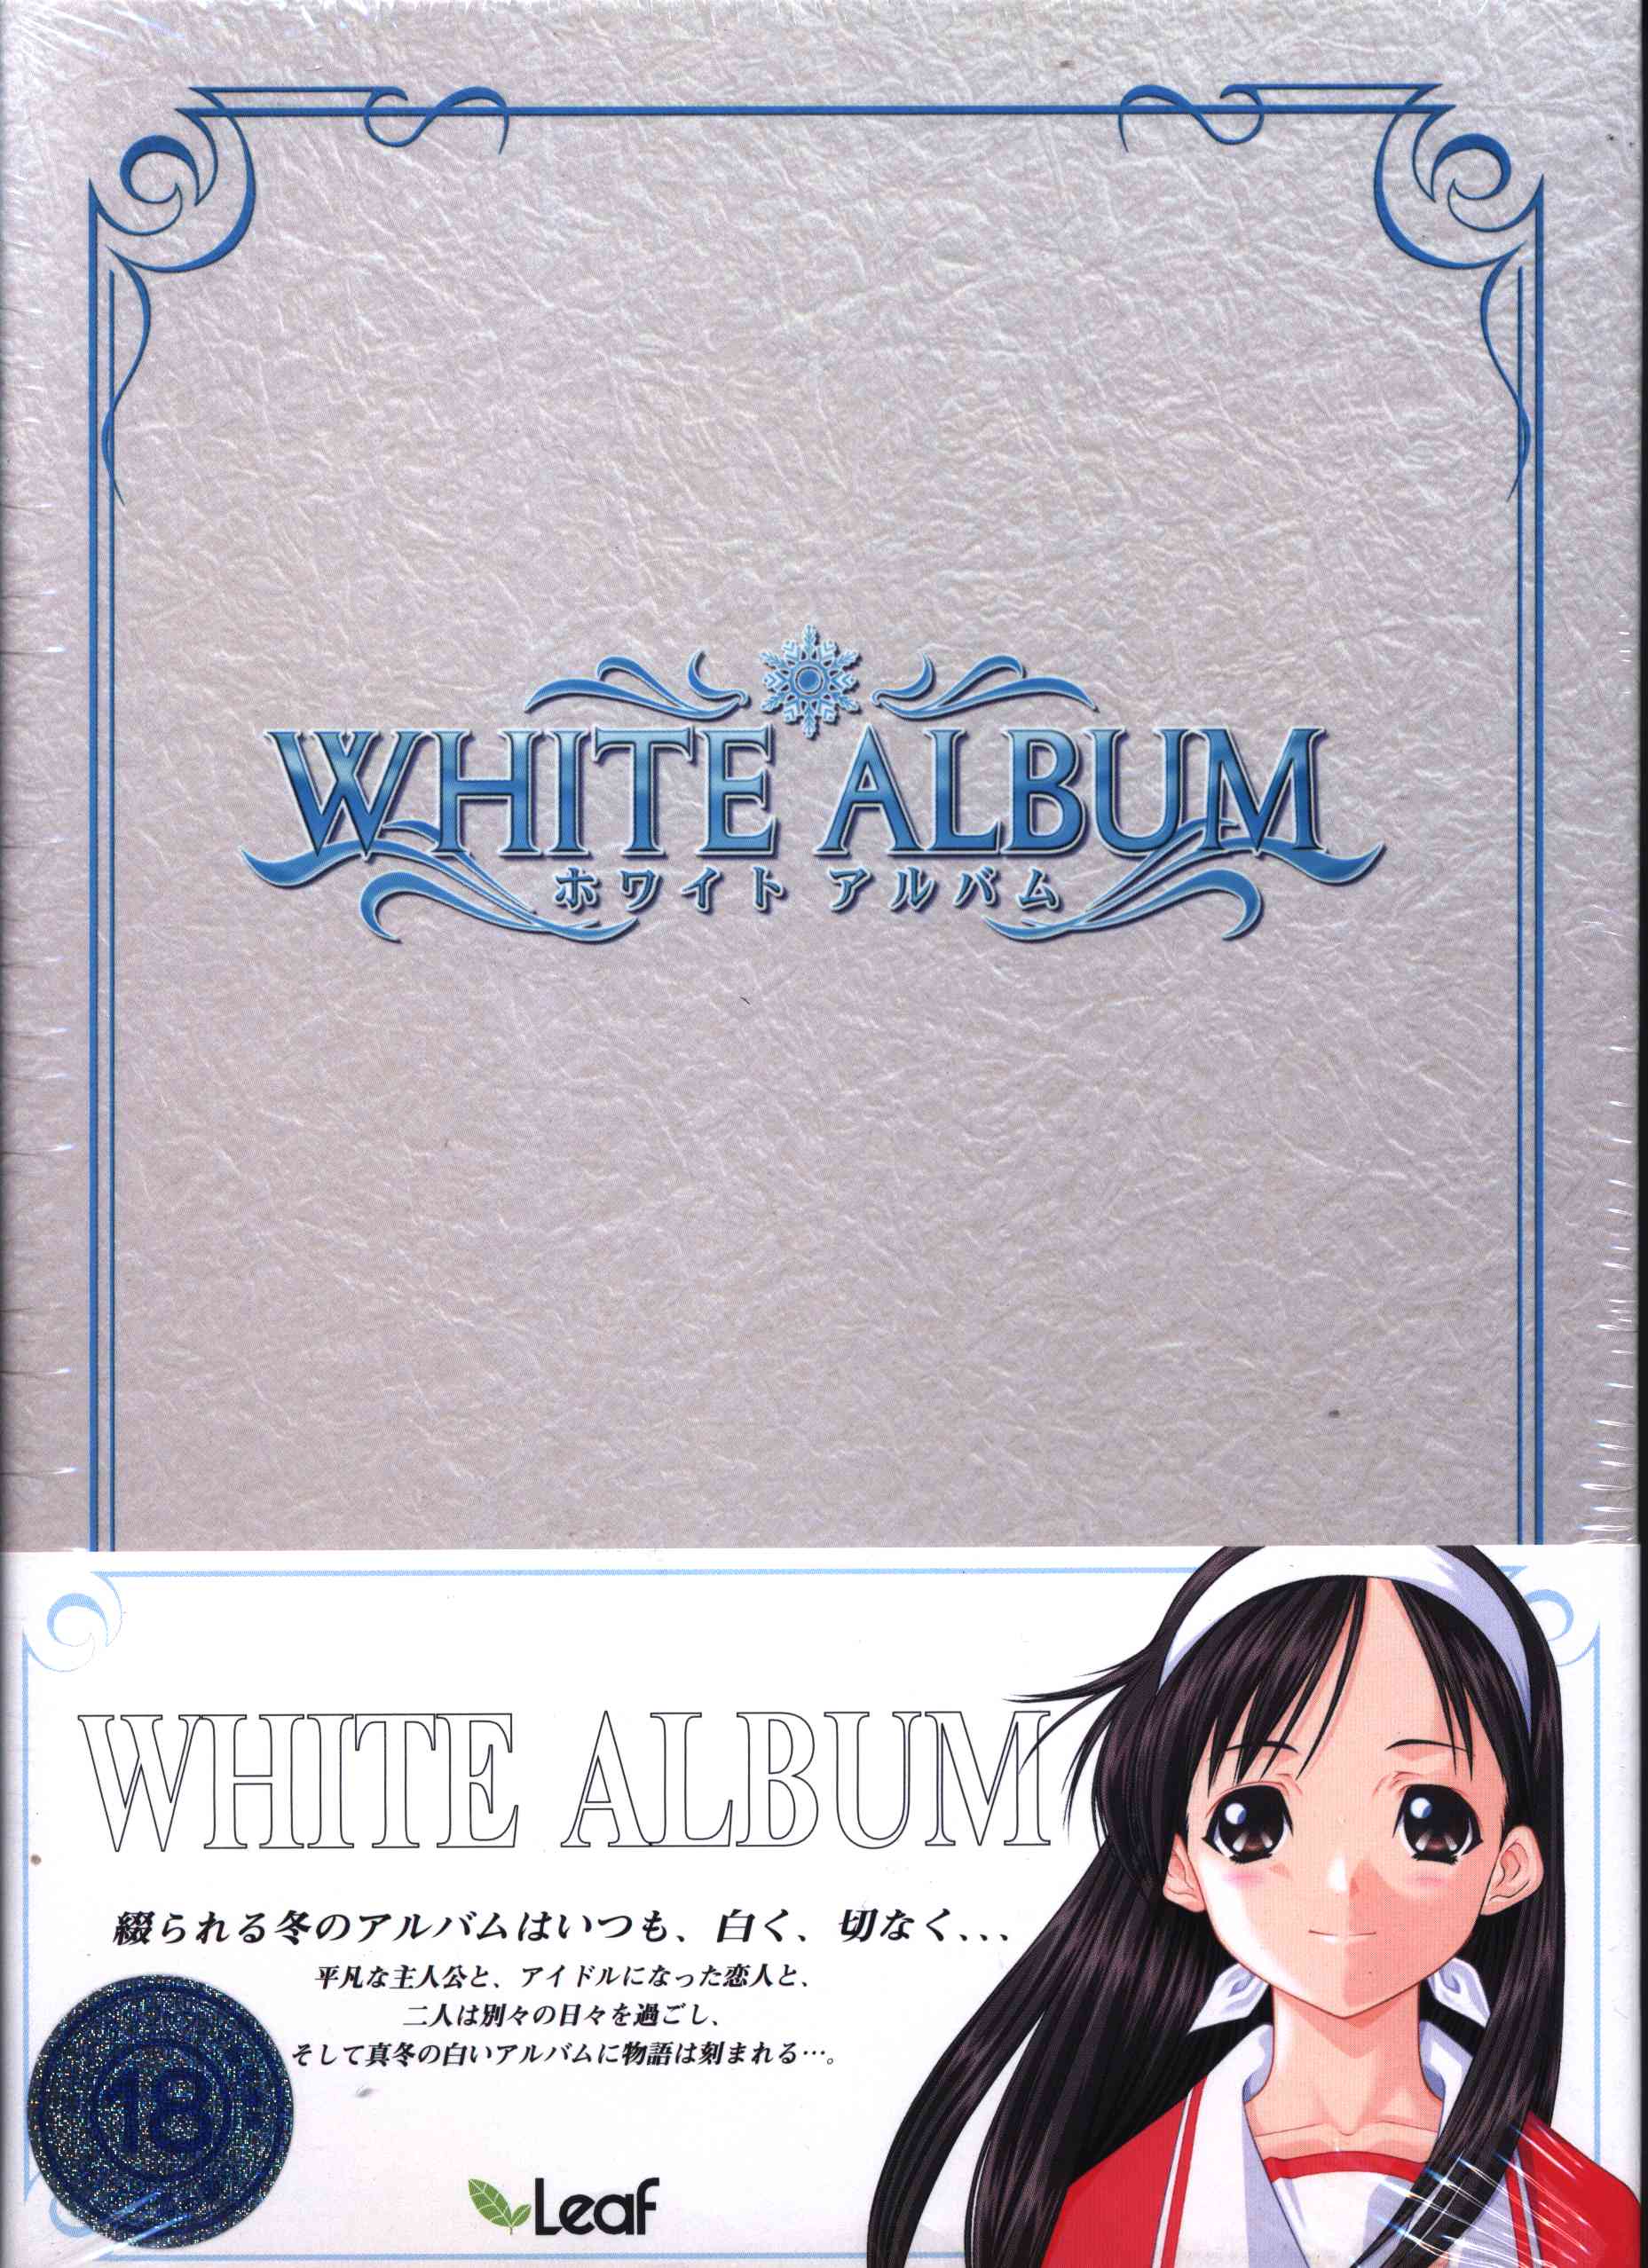 White album 初回盤 ホワイトアルバムWhitealbum - アニメ